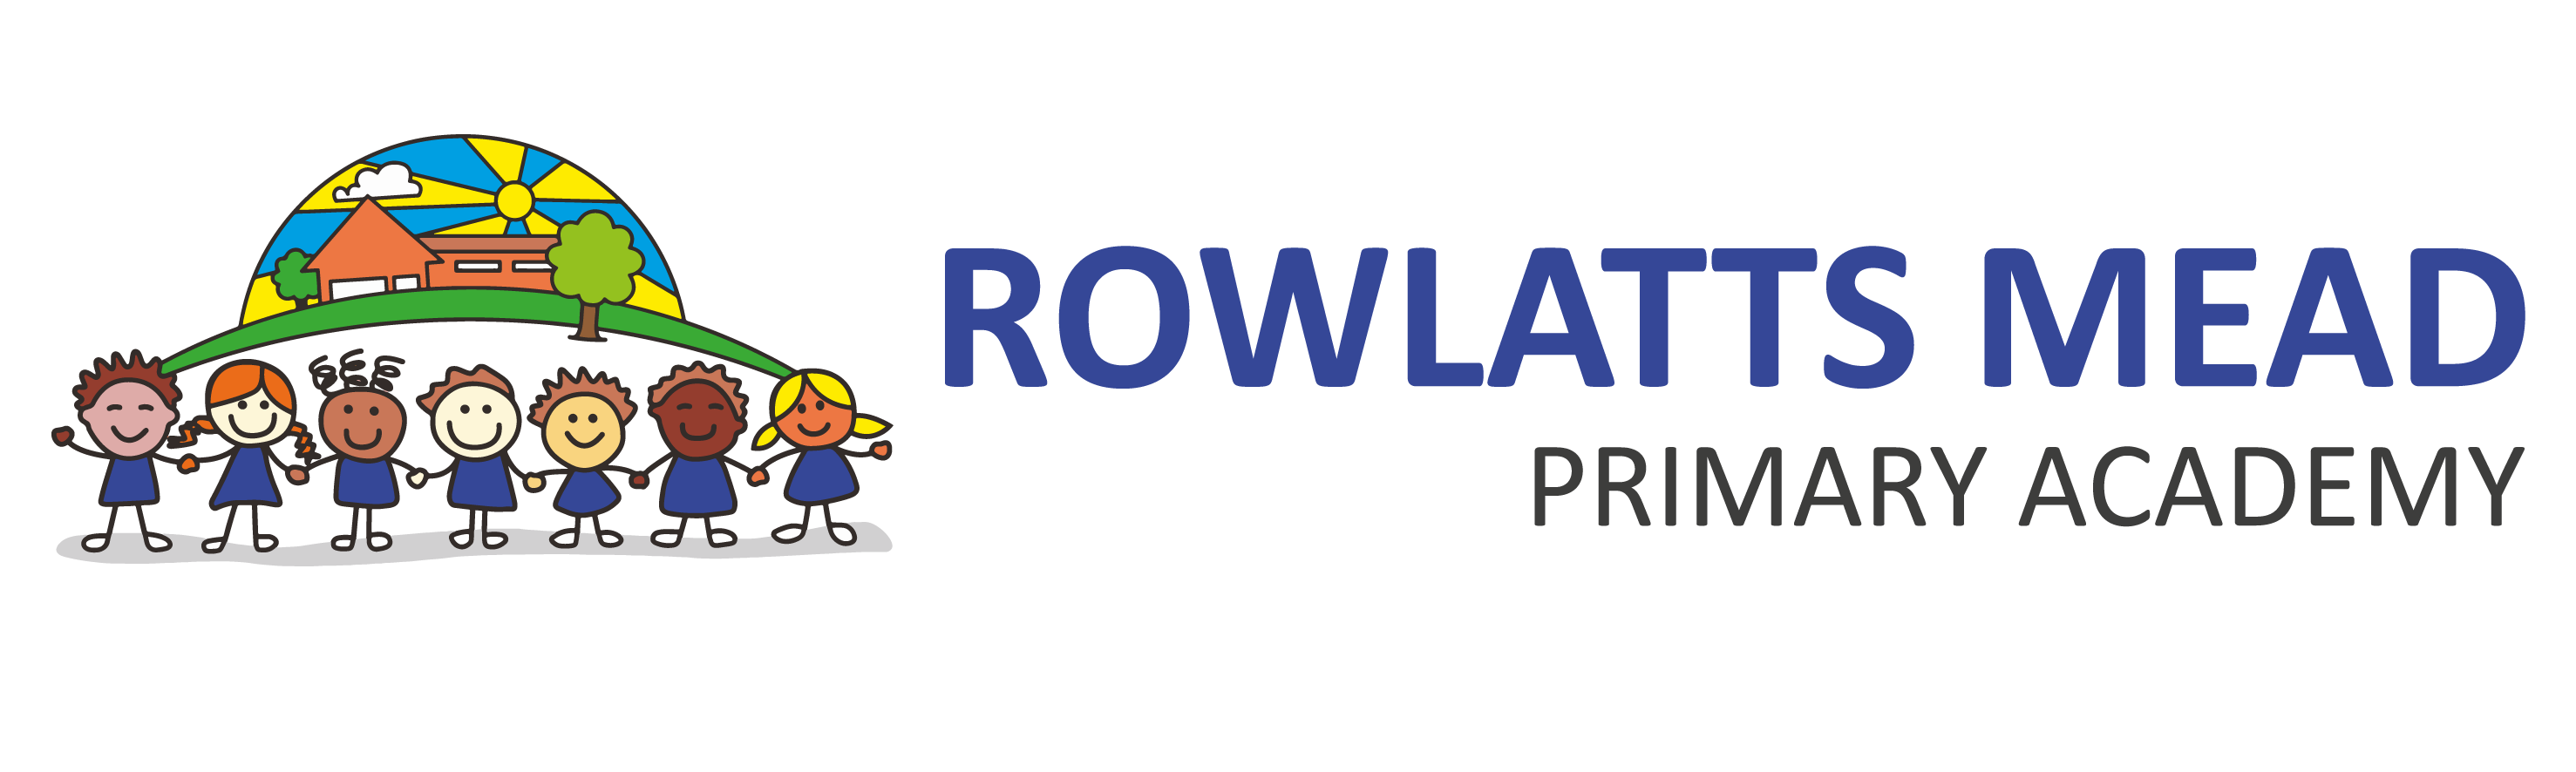 Rowlatts Mead Primary Academy | TMET Leicester MAT Logo